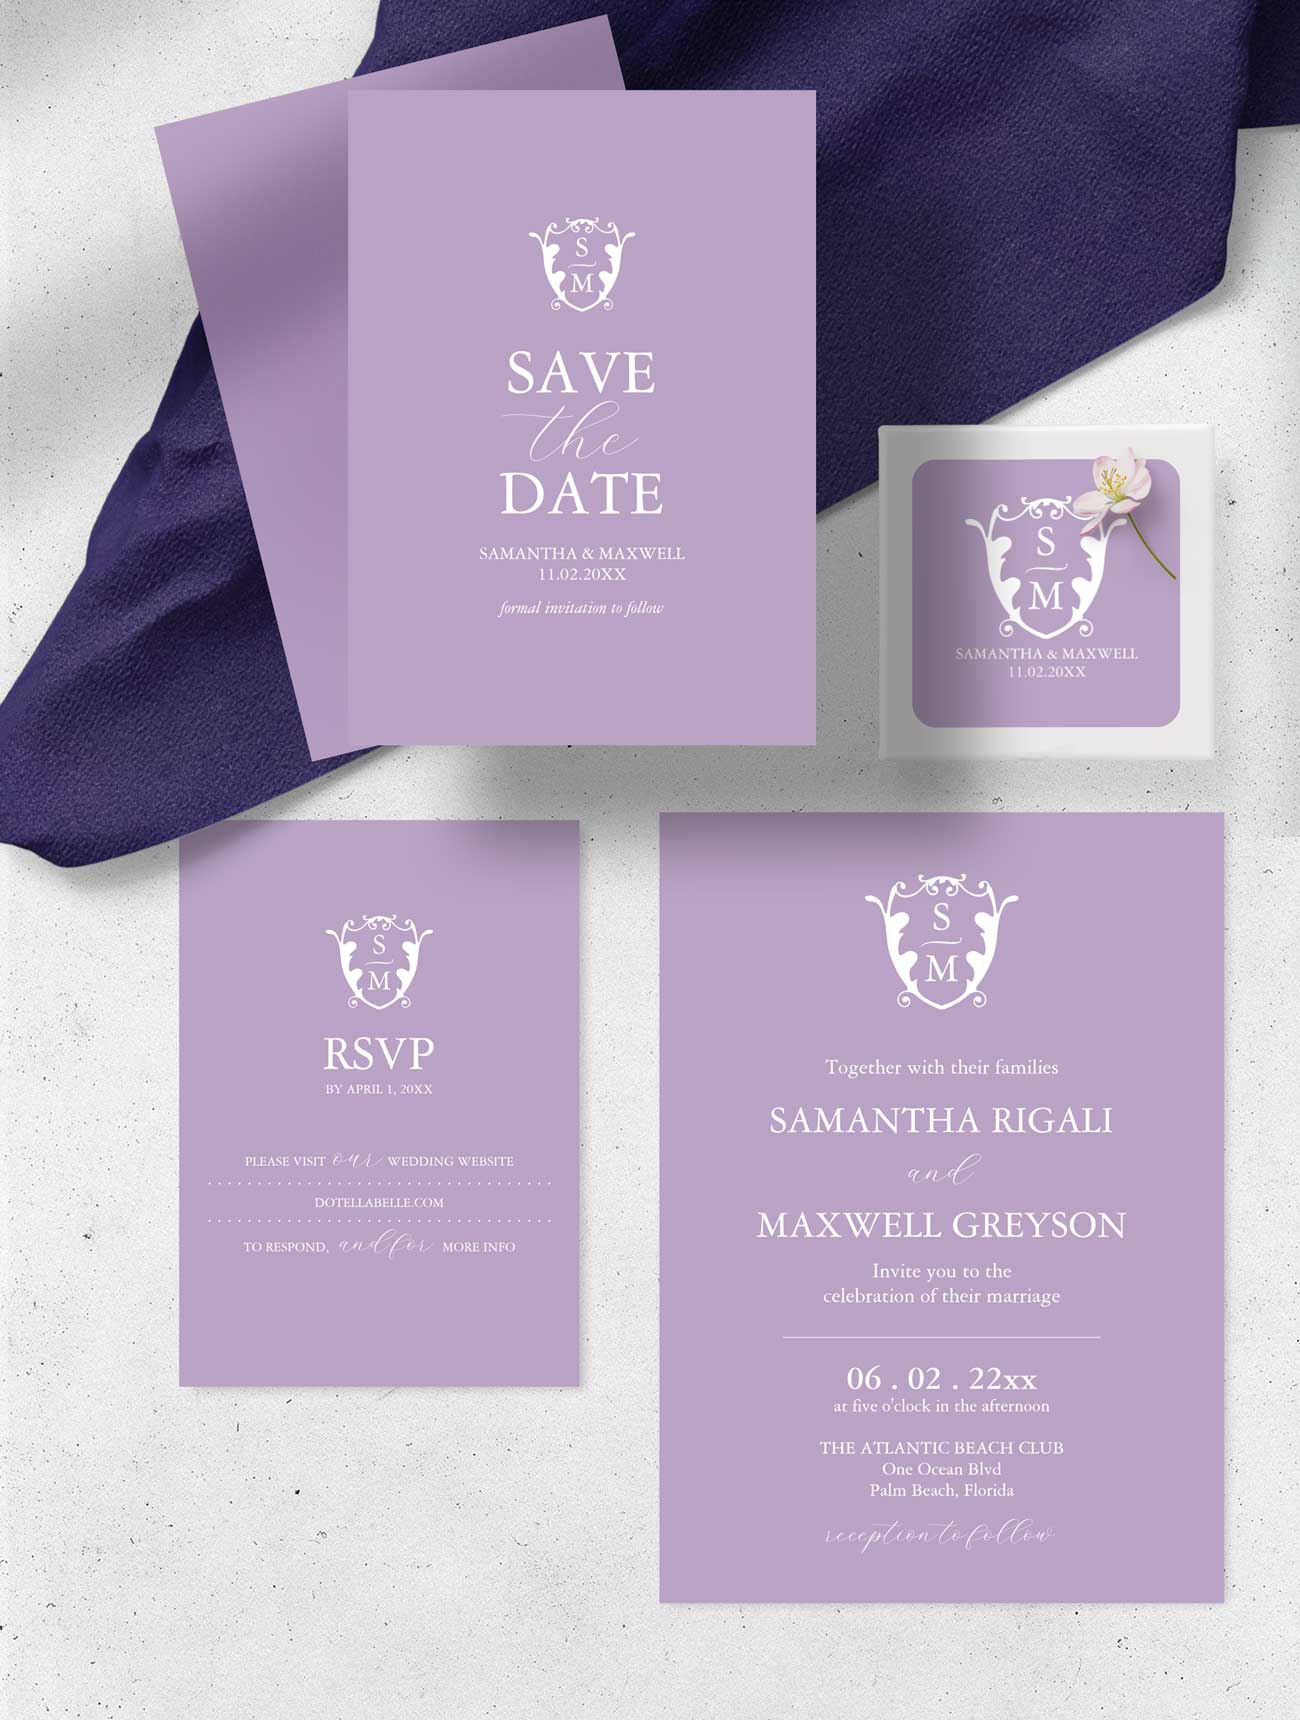 Monogram wedding invitations in a lavender color. Click to shop the suite.